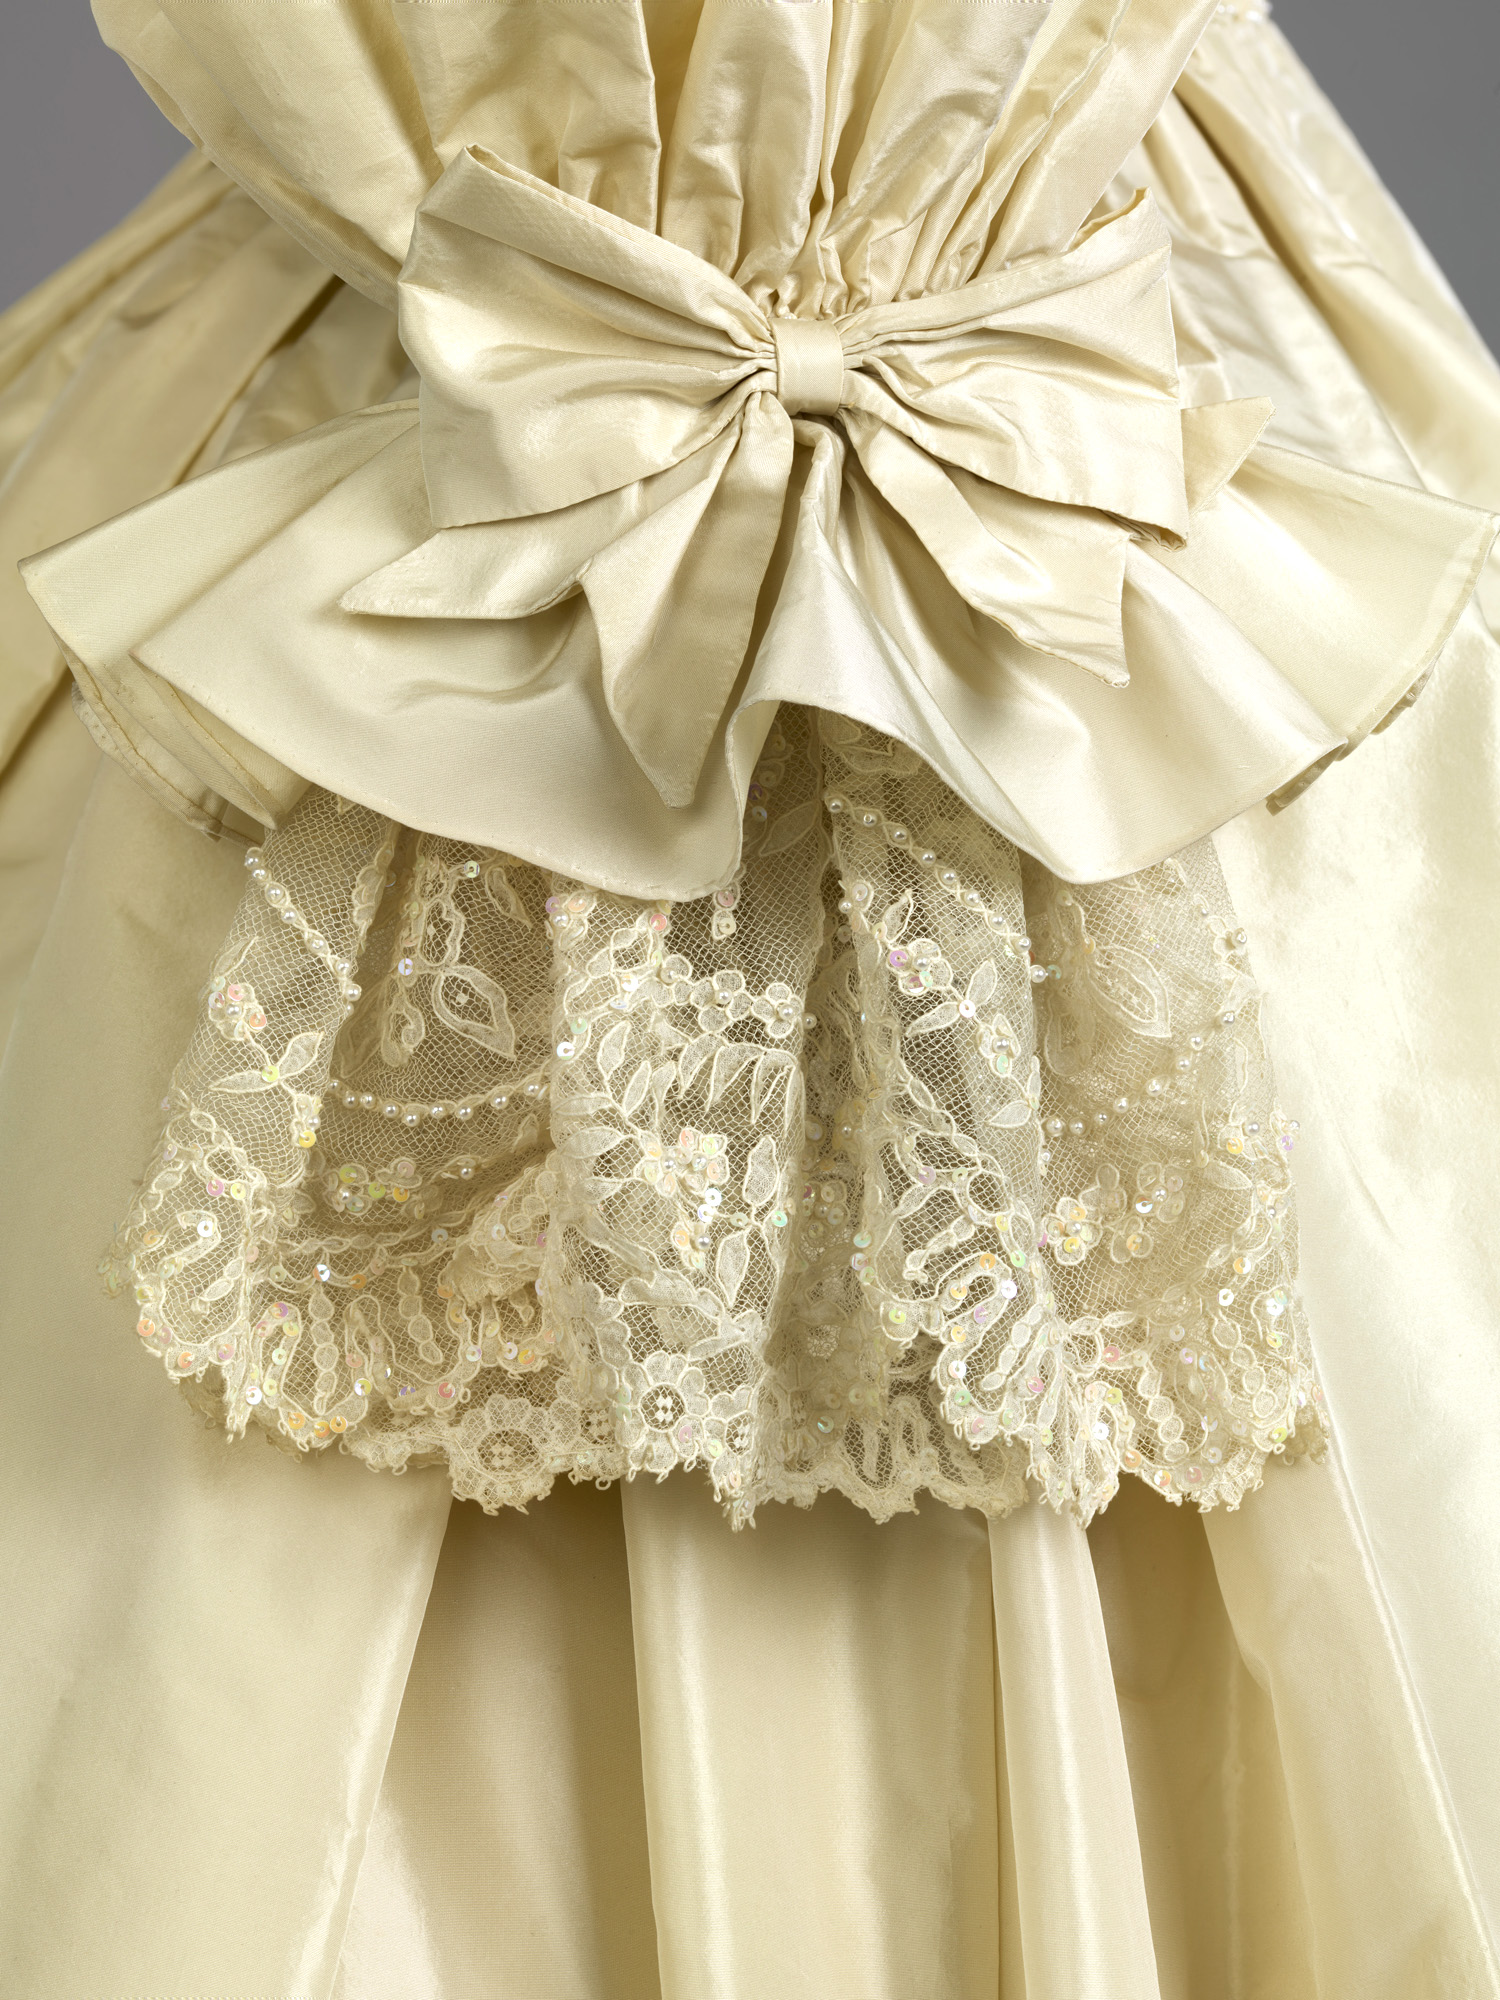 Wedding gown of Diana Princess